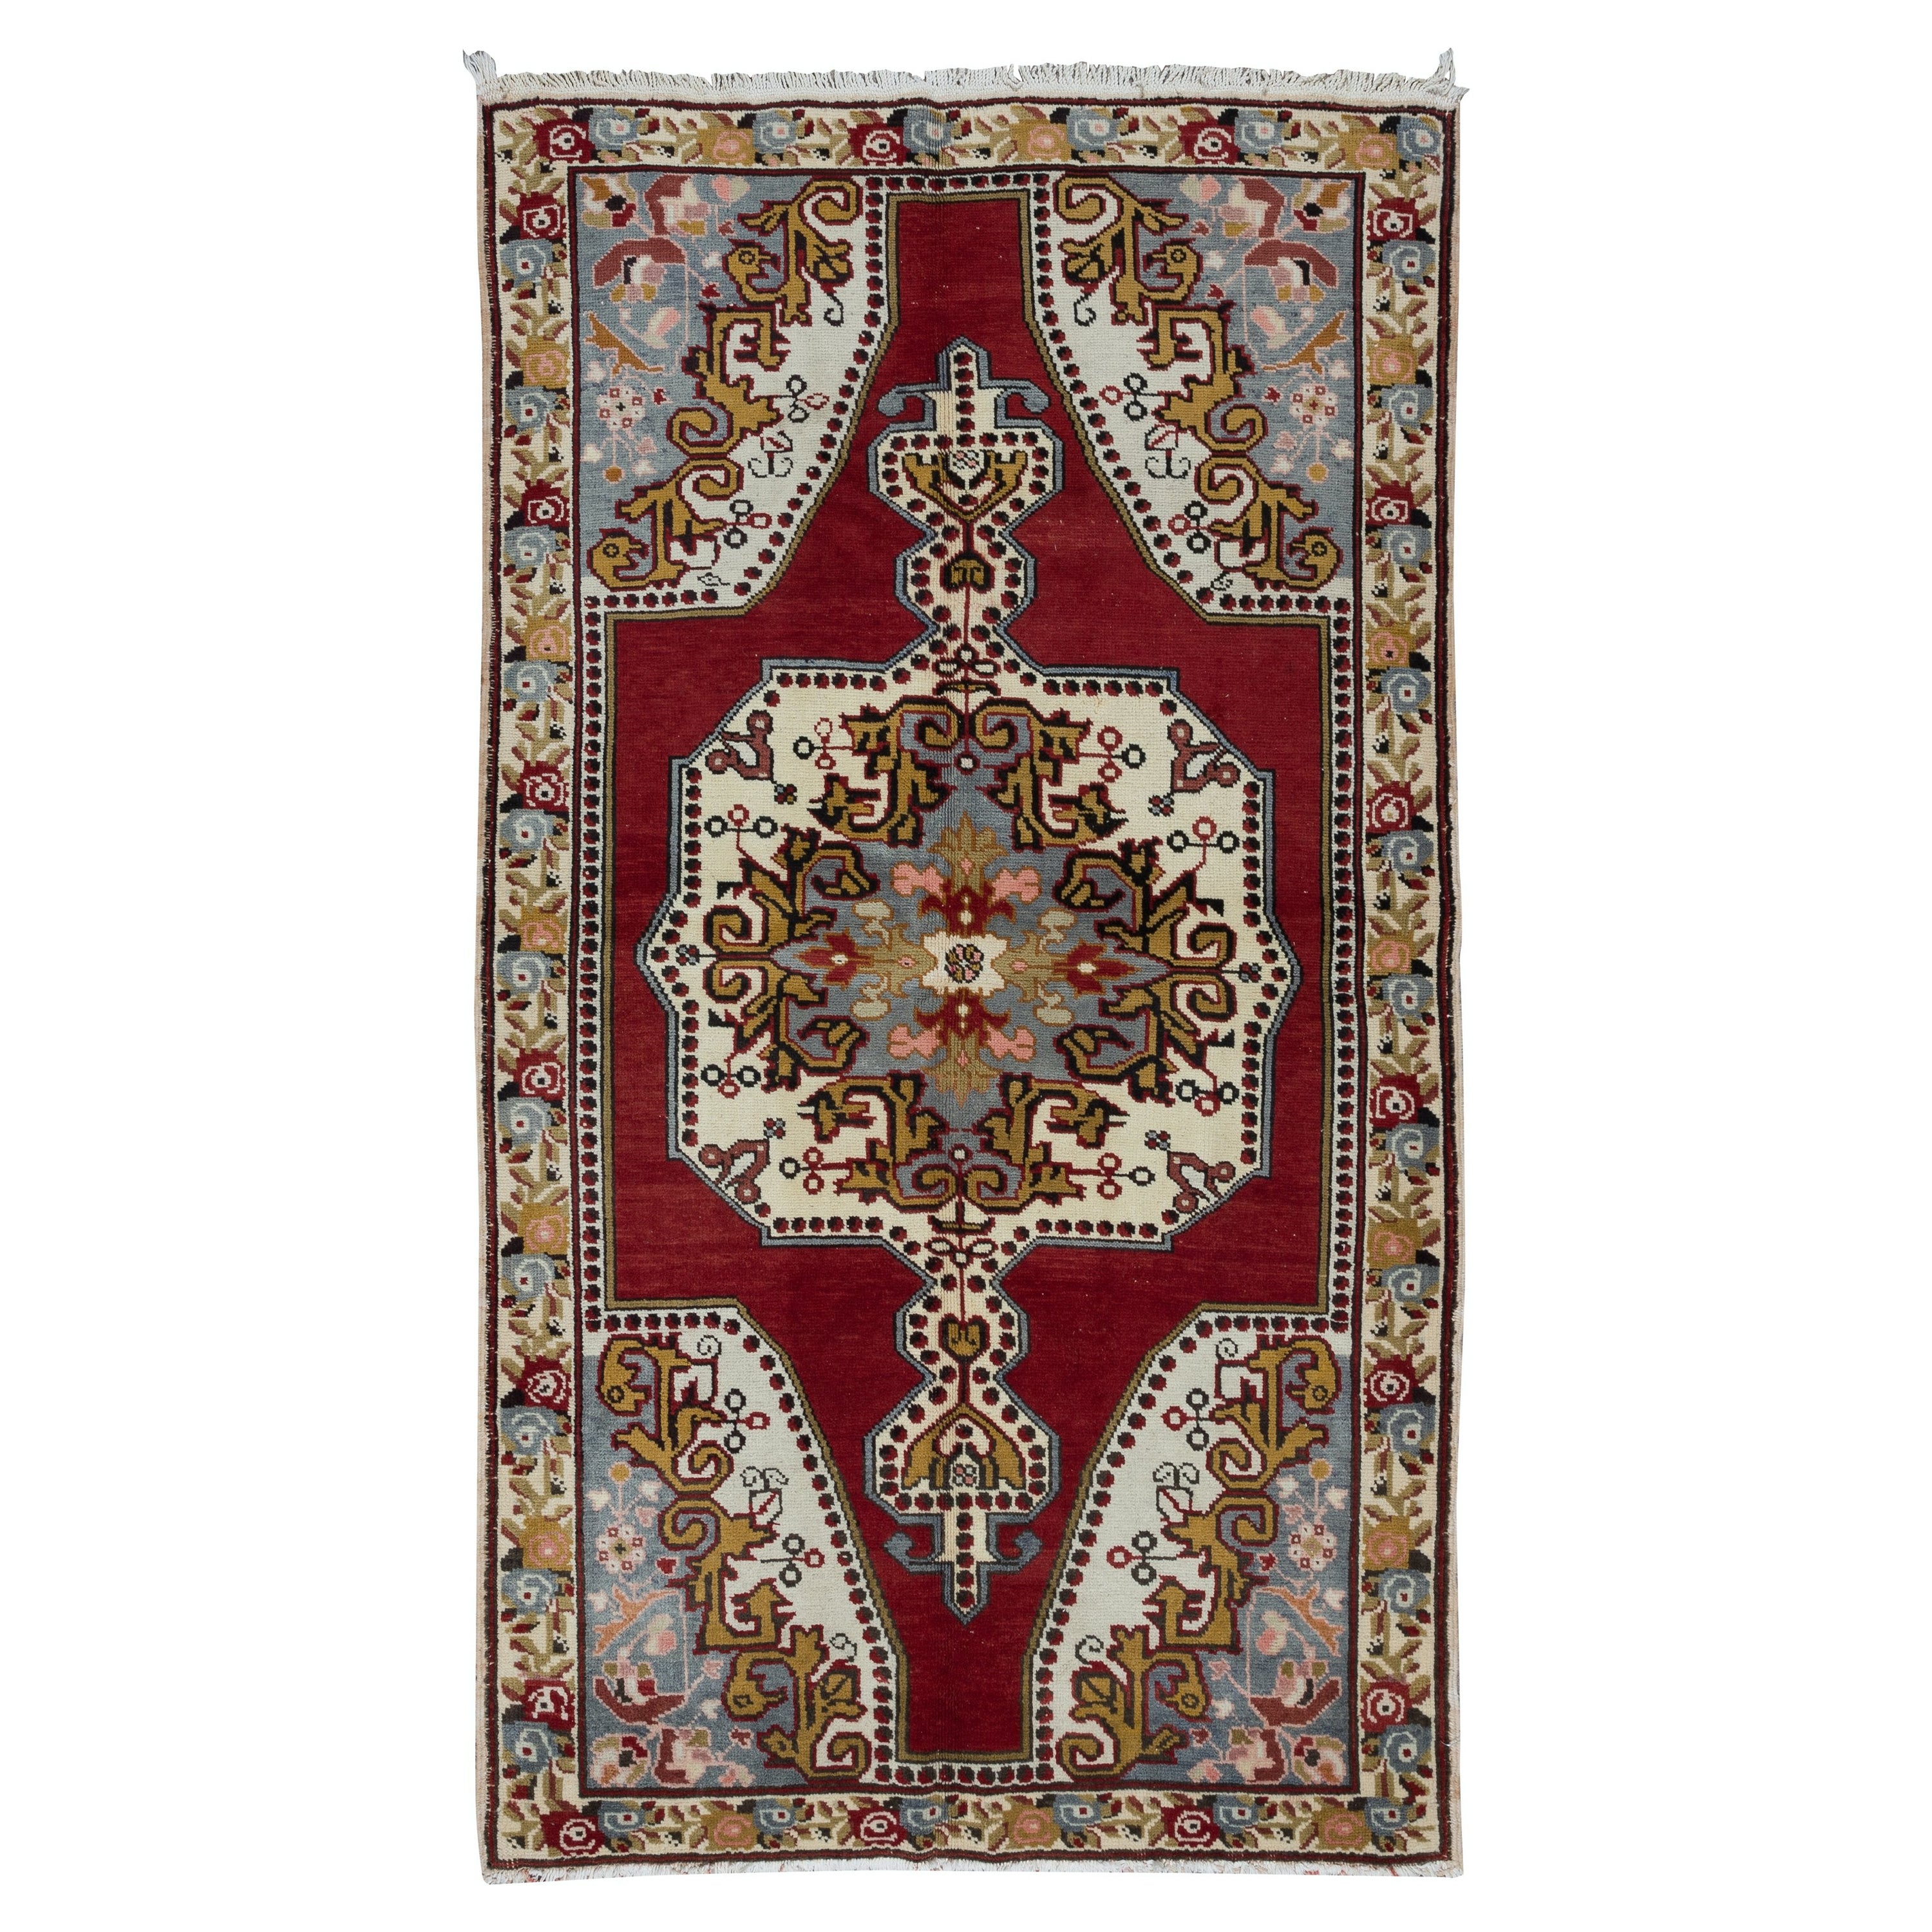 4.6x8 Ft Traditional Oriental Rug in Burgundy Red, 1960s Handmade Turkish Carpet (Tapis turc fait à la main) en vente